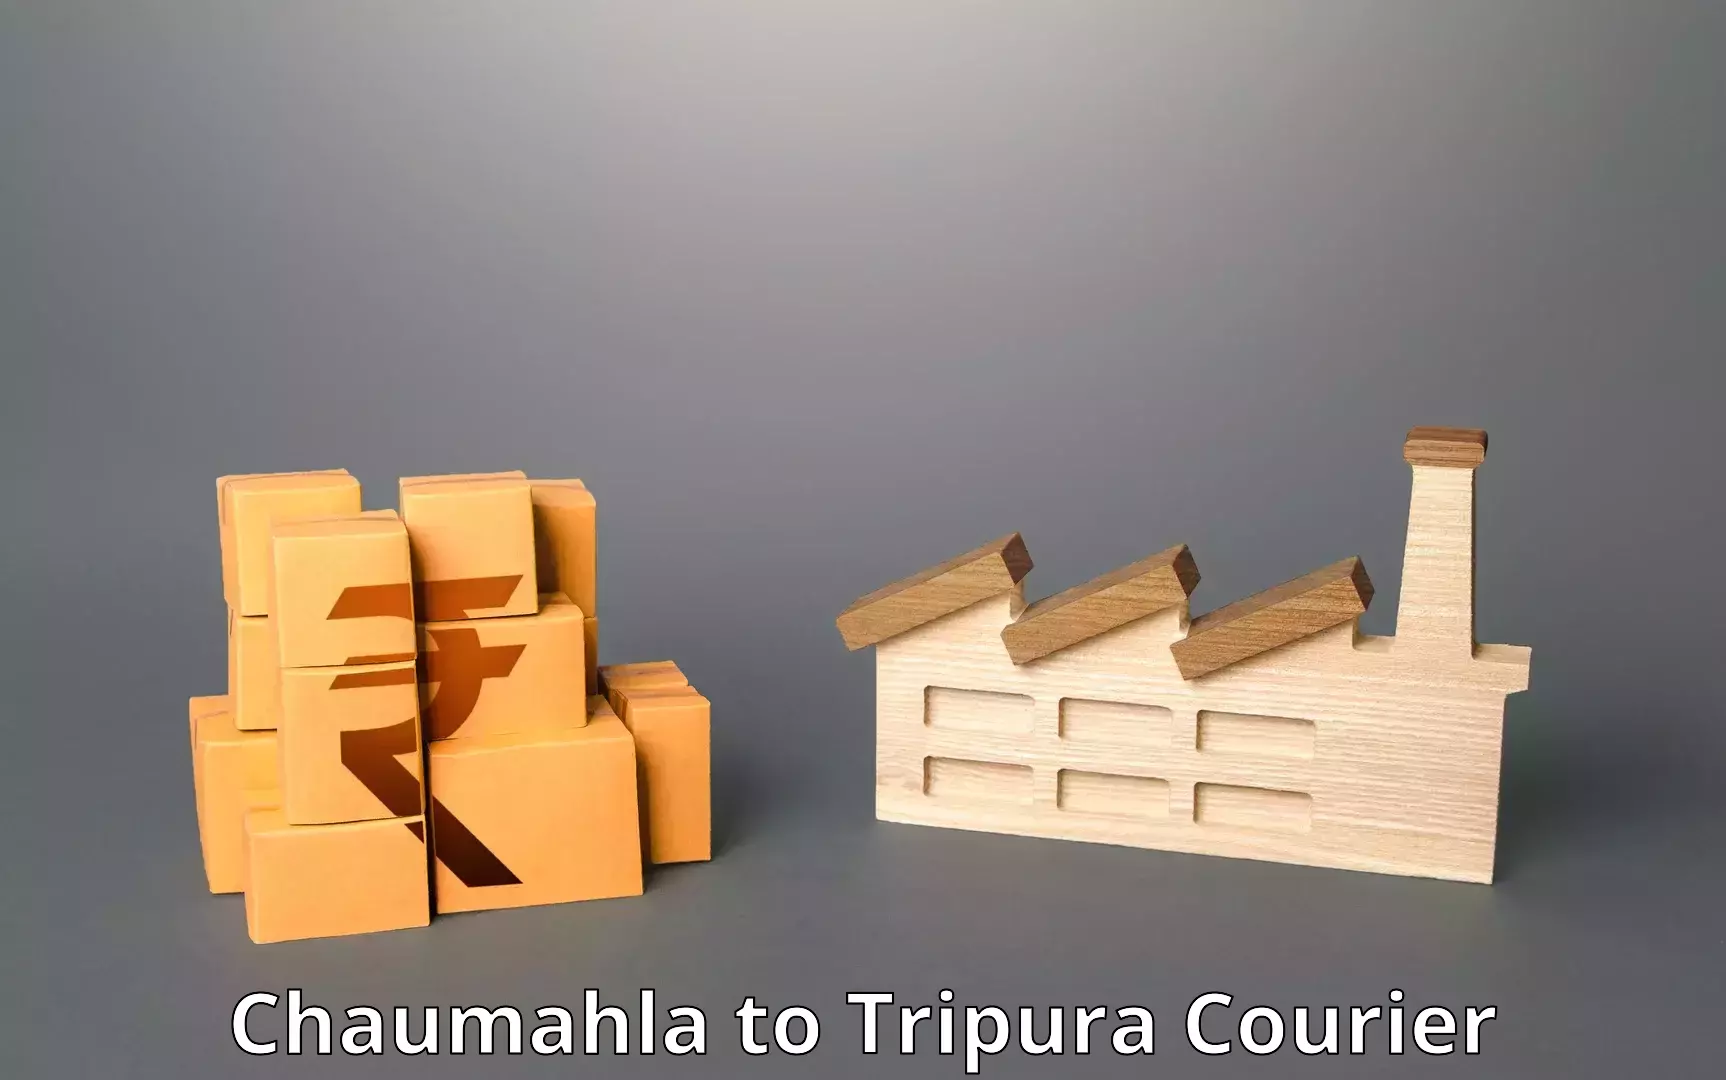 Express logistics service Chaumahla to Udaipur Tripura